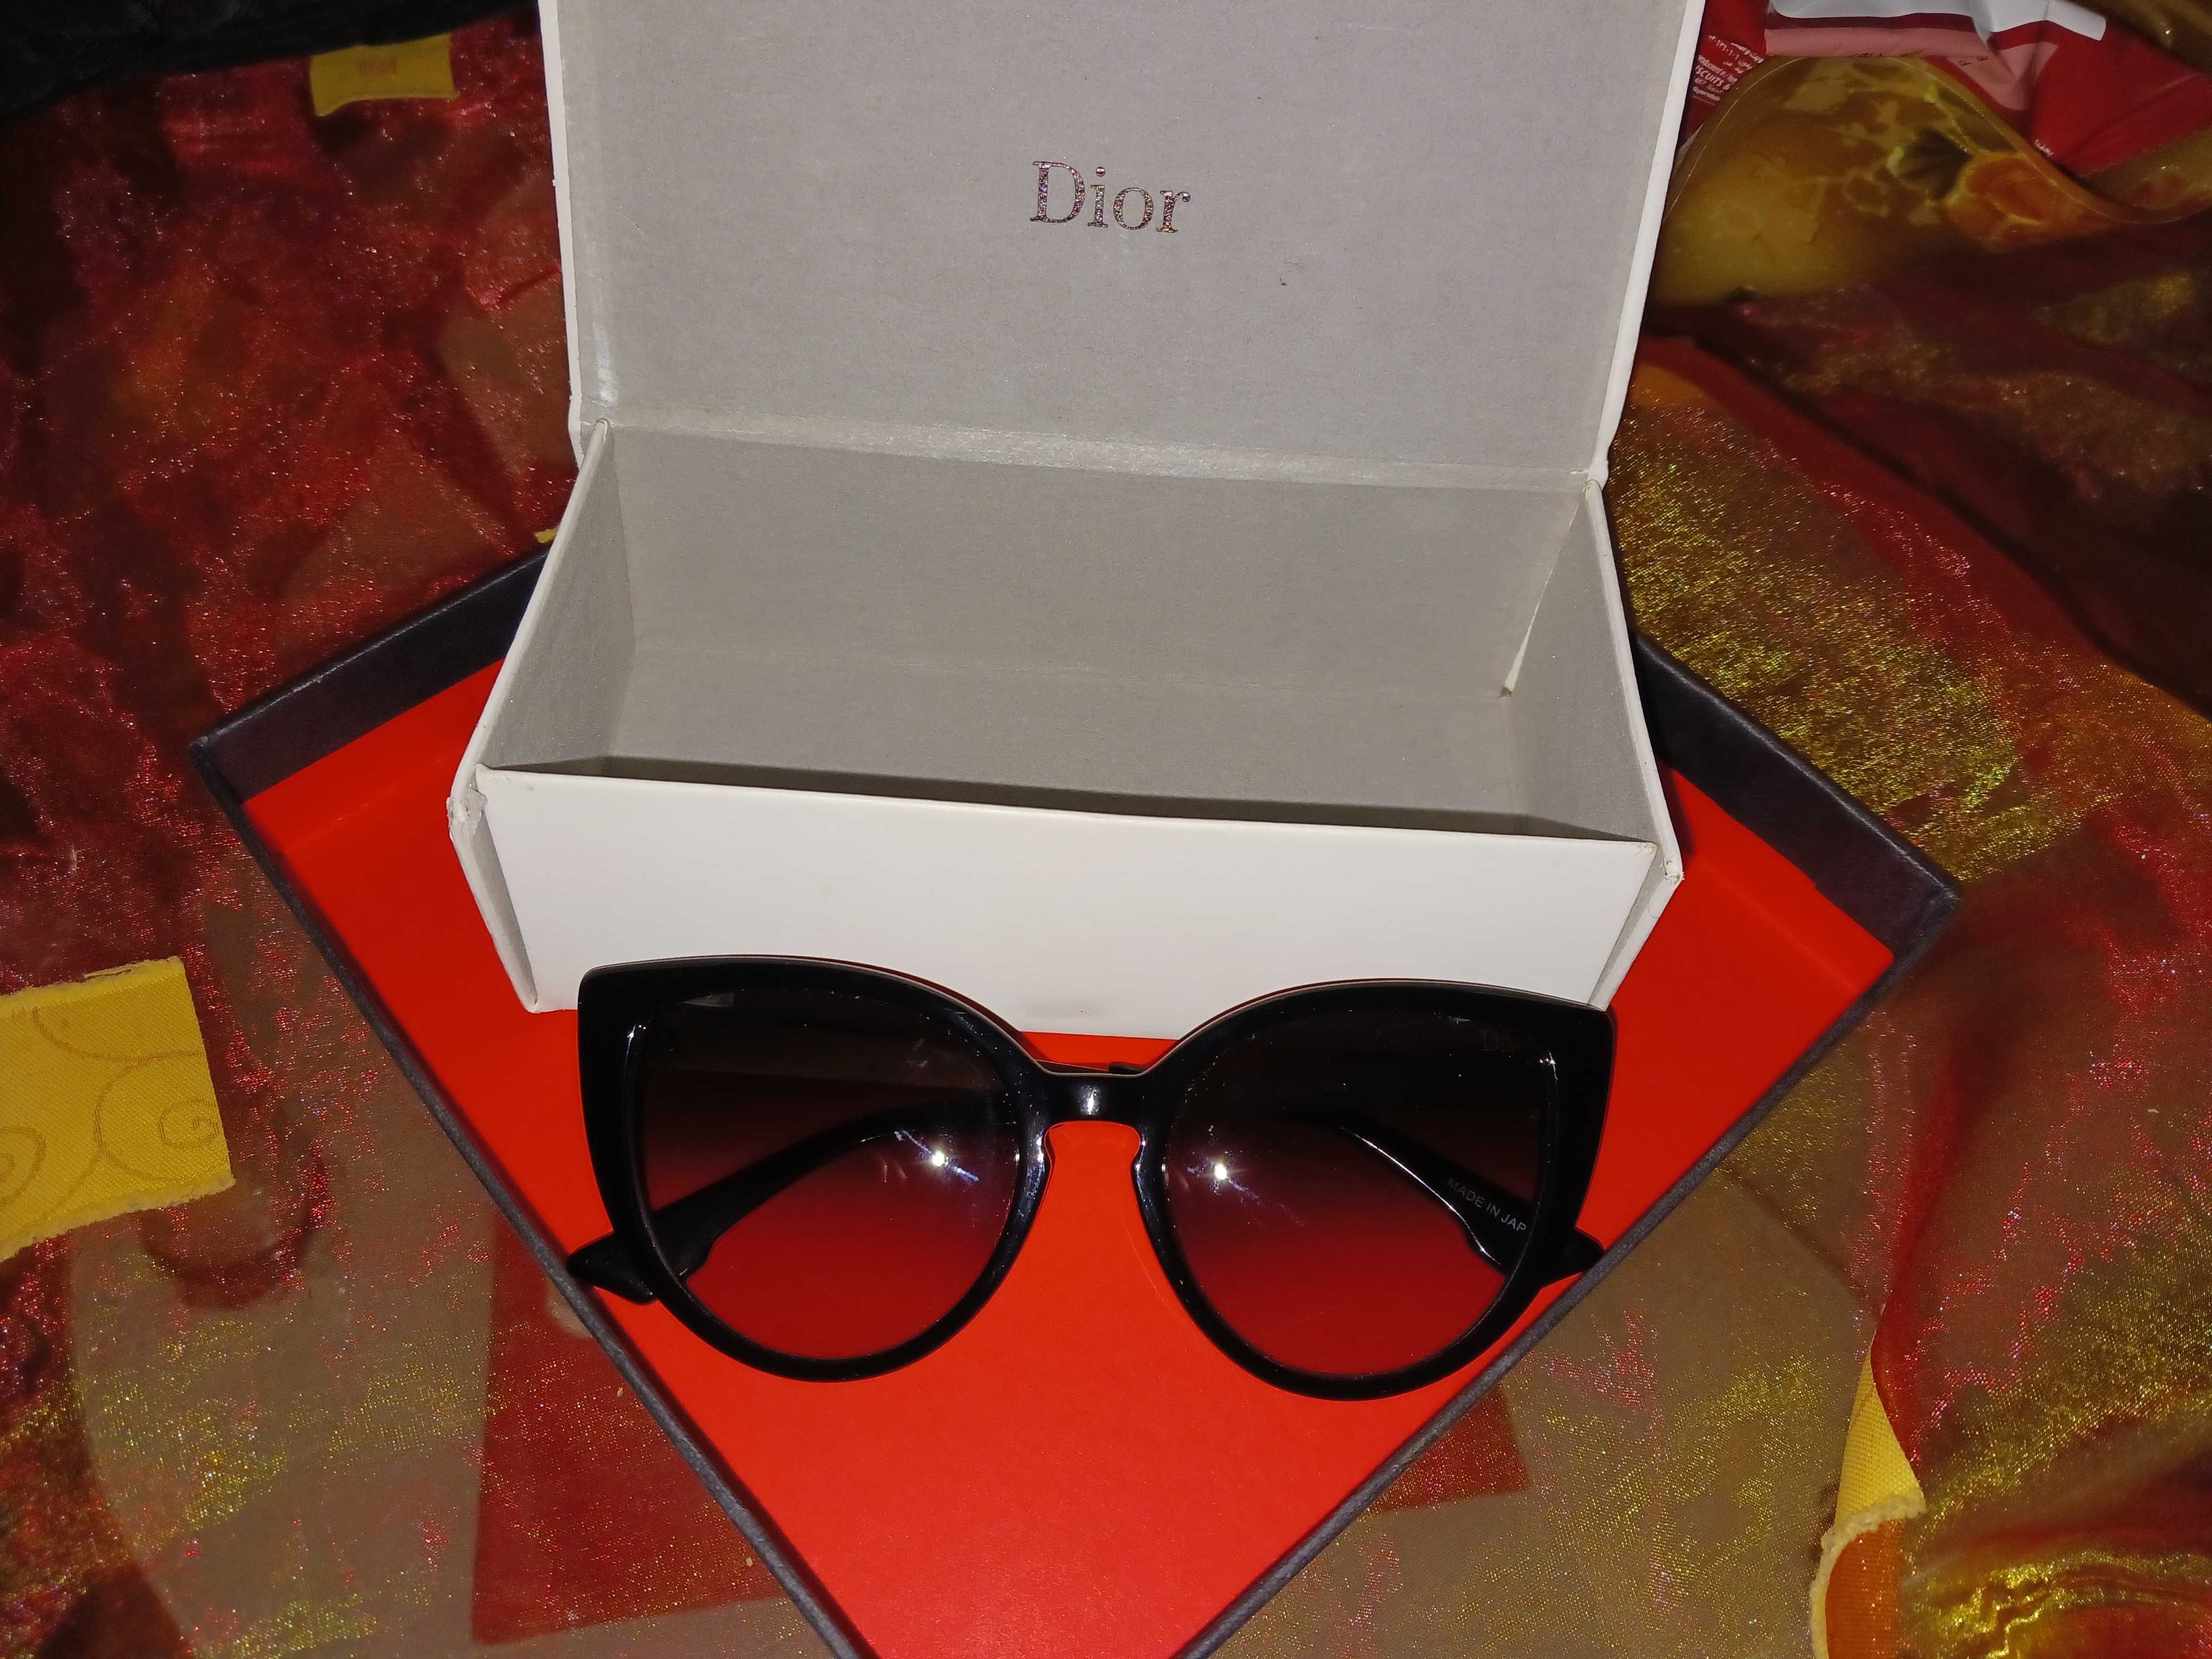 Слънчеви очила Christian Dior